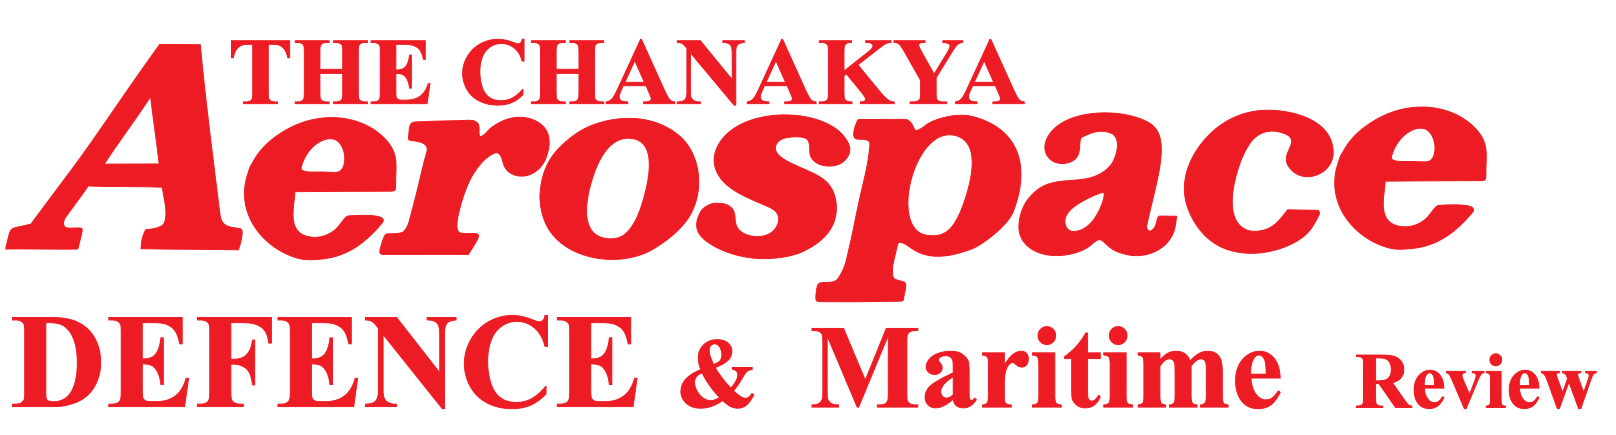 CHANAKYA AEROSPACE, DEFENCE & MARITIME REVIEW 